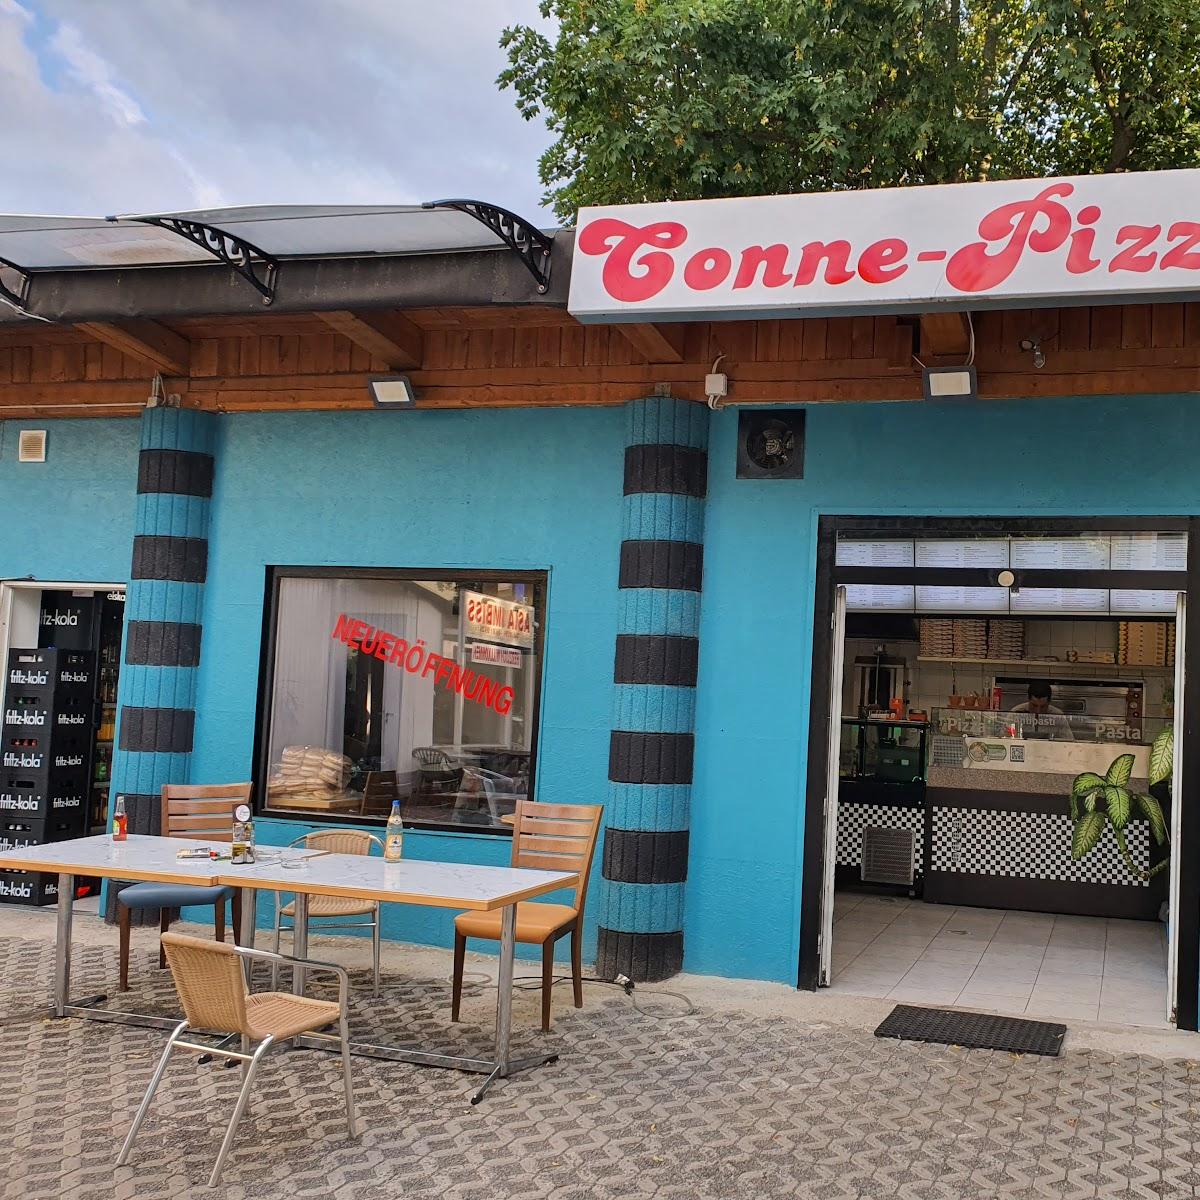 Restaurant "Conne-Pizza" in Leipzig